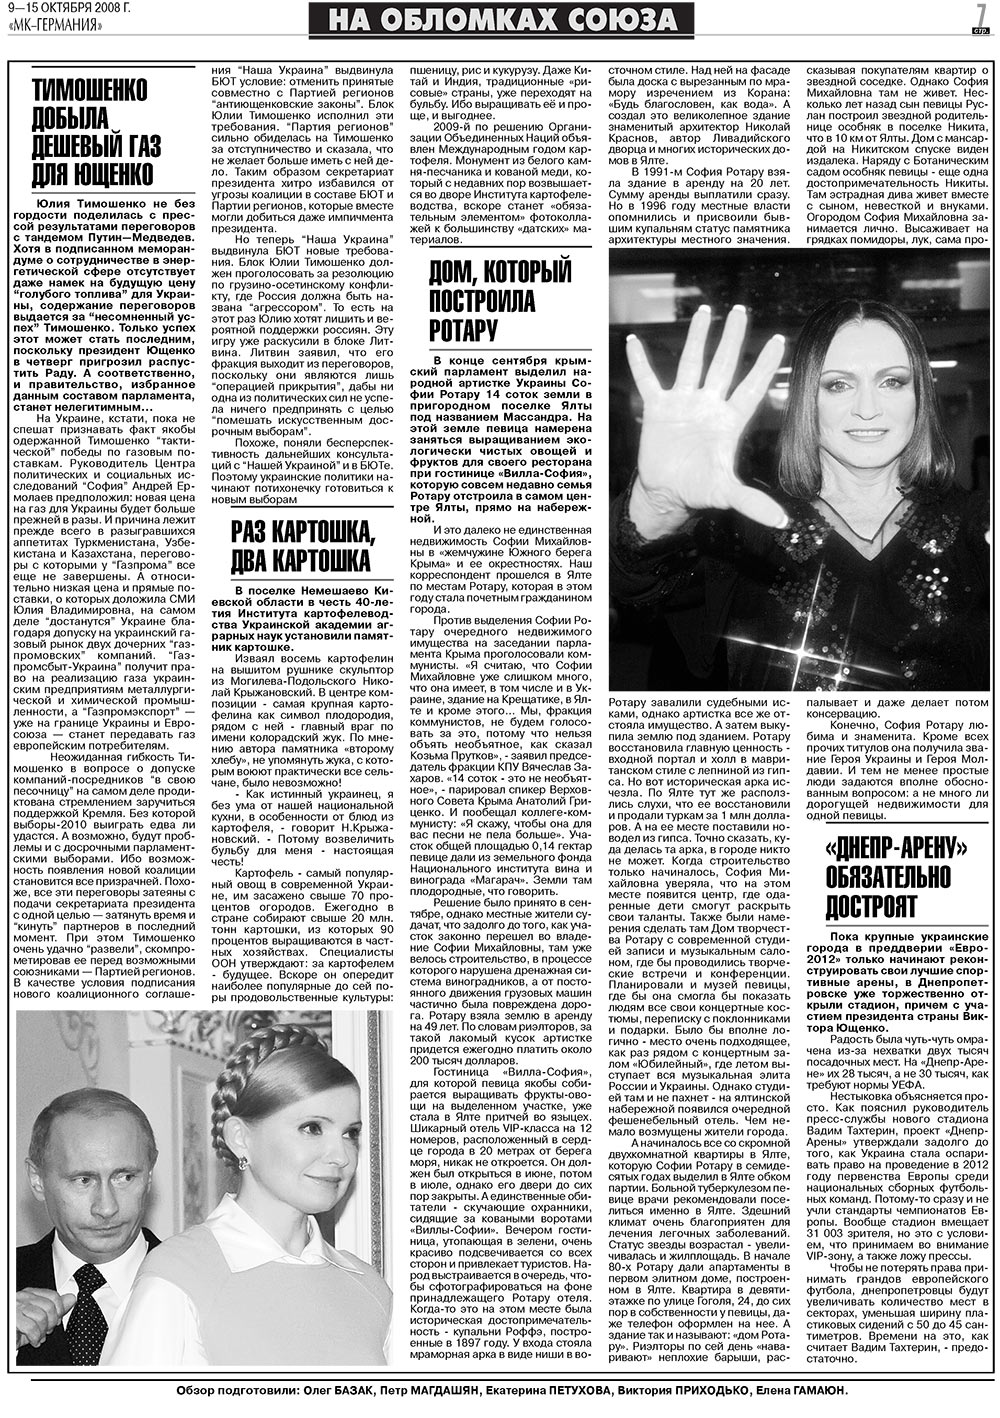 МК-Германия, газета. 2008 №41 стр.7